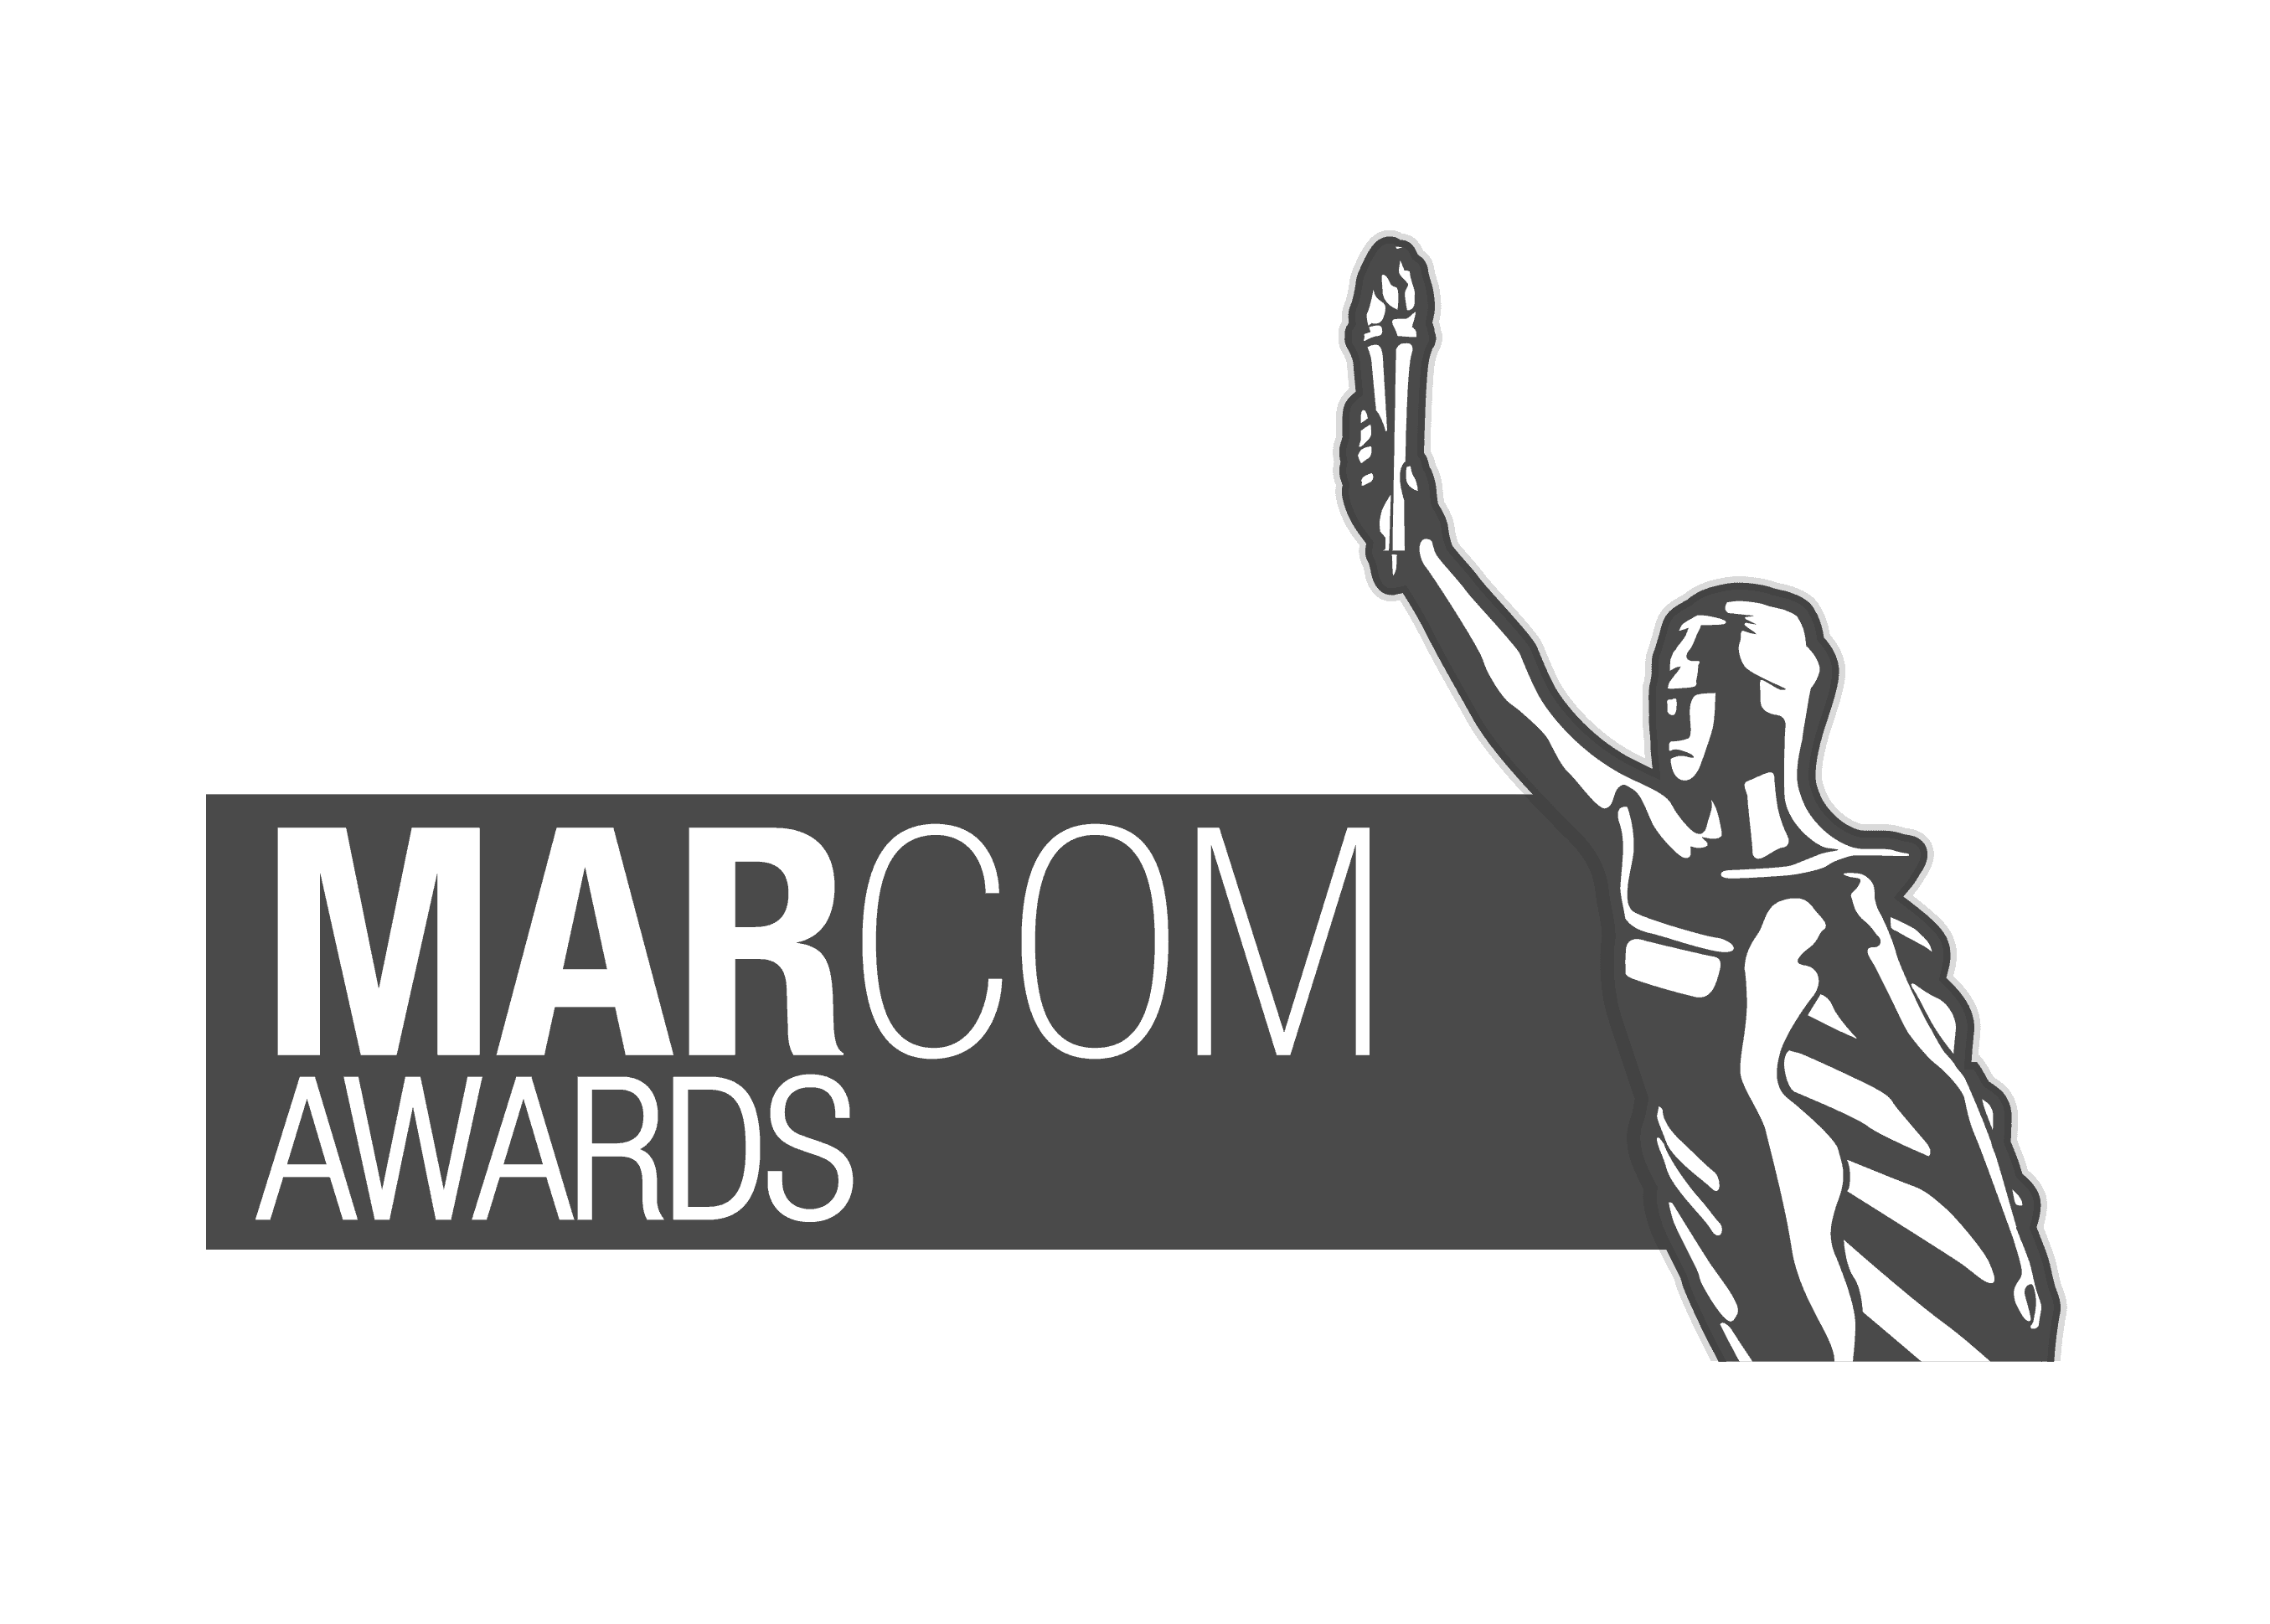 Marcom Award